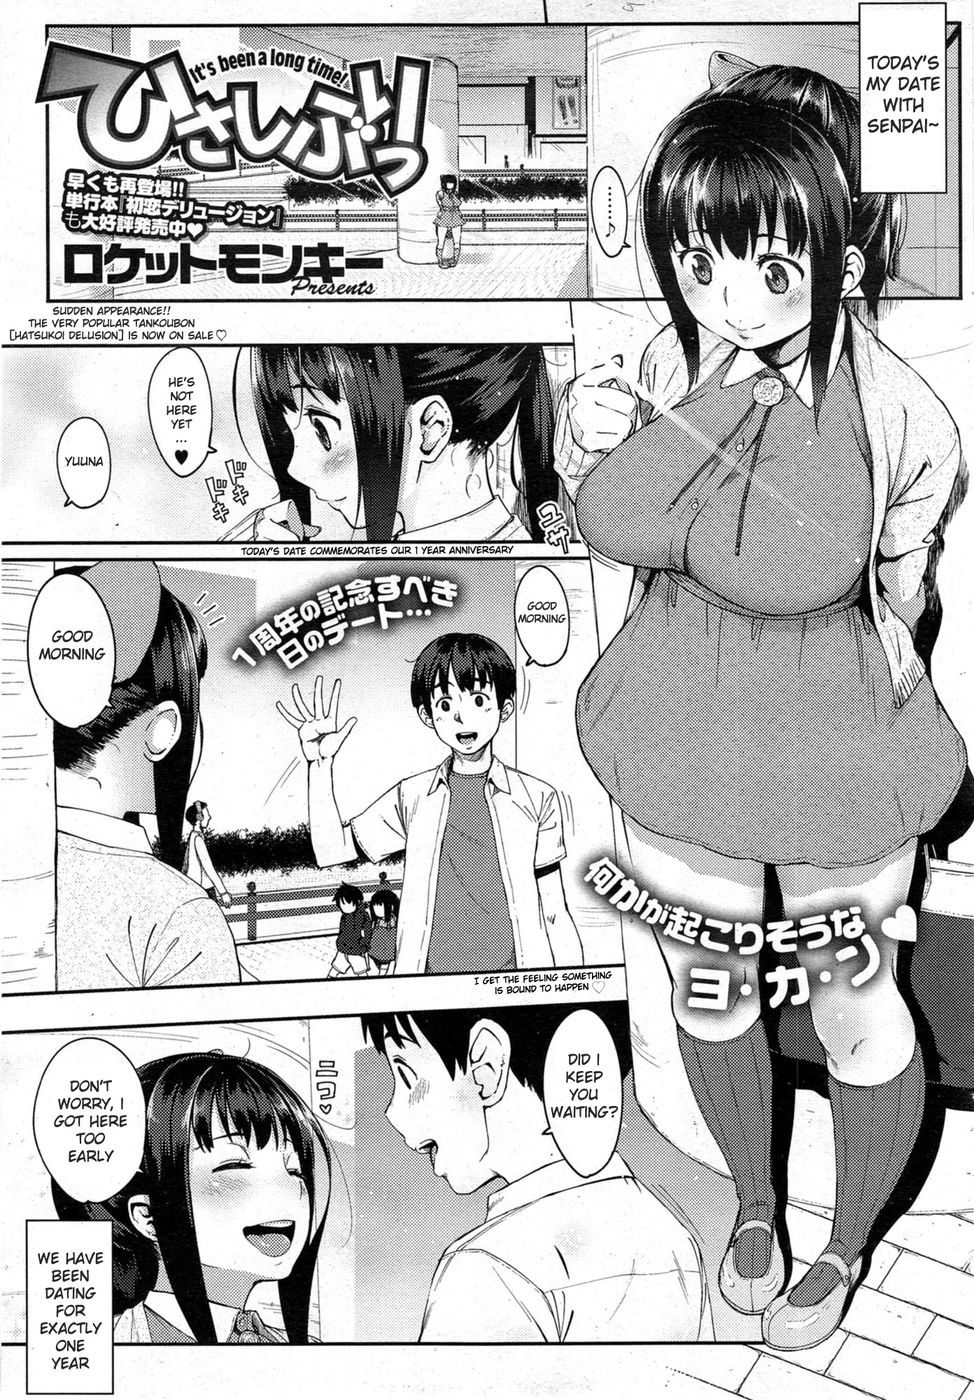 Hentai Manga Comic-It's Been a Long Time!-Read-1